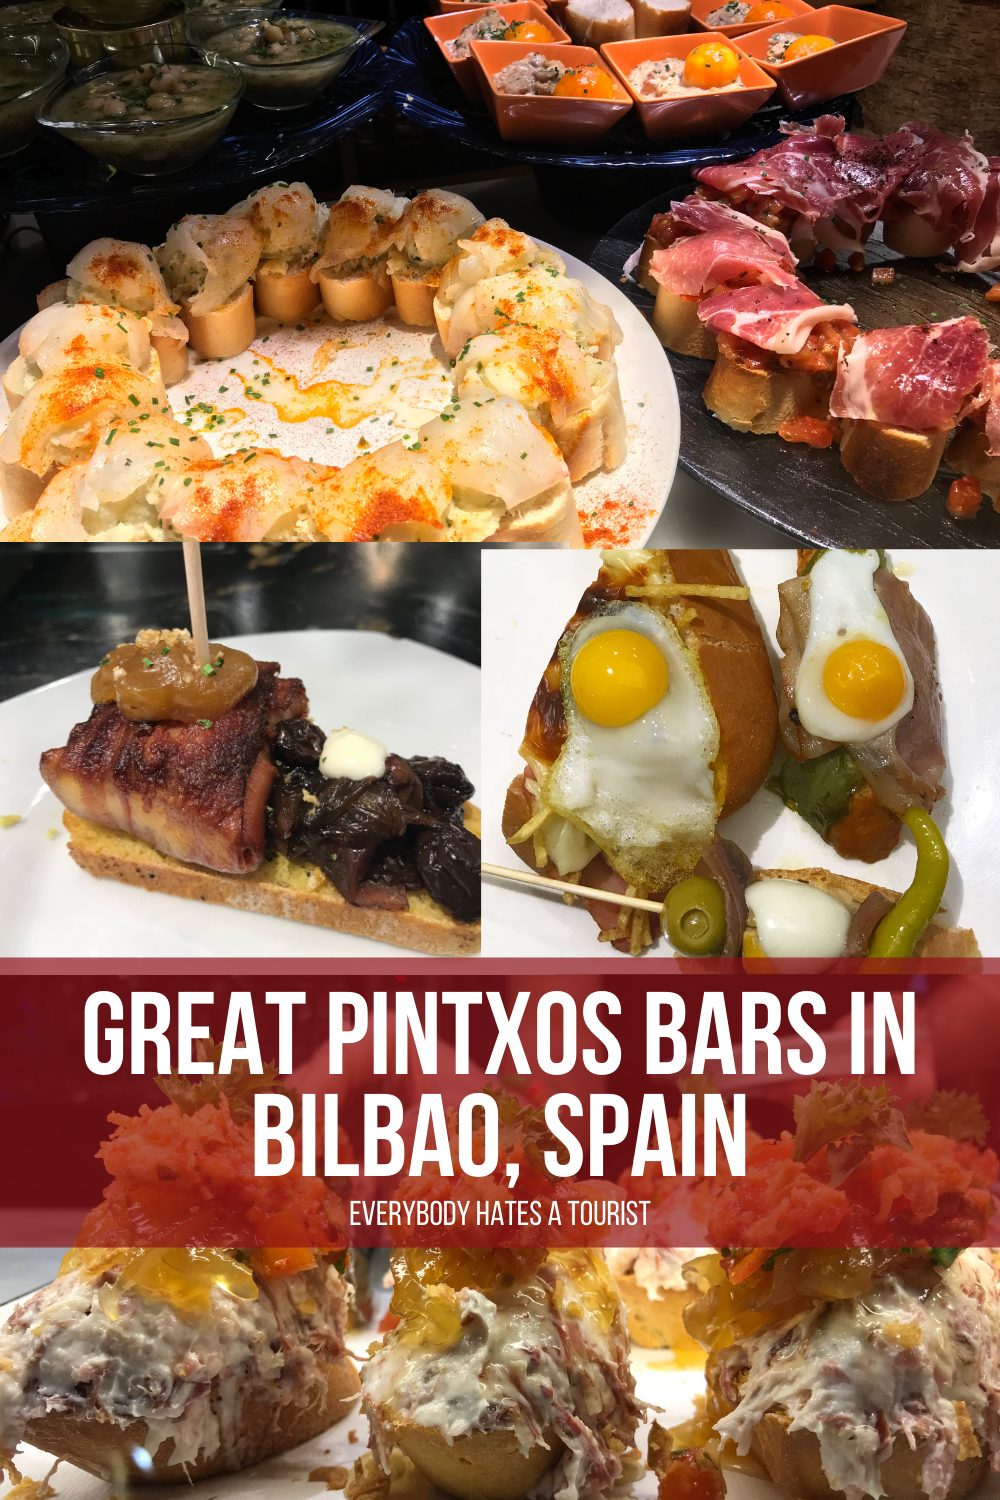 great pintxos bars in bilbao spain - 15 Great Pintxos Bars in Bilbao, Spain